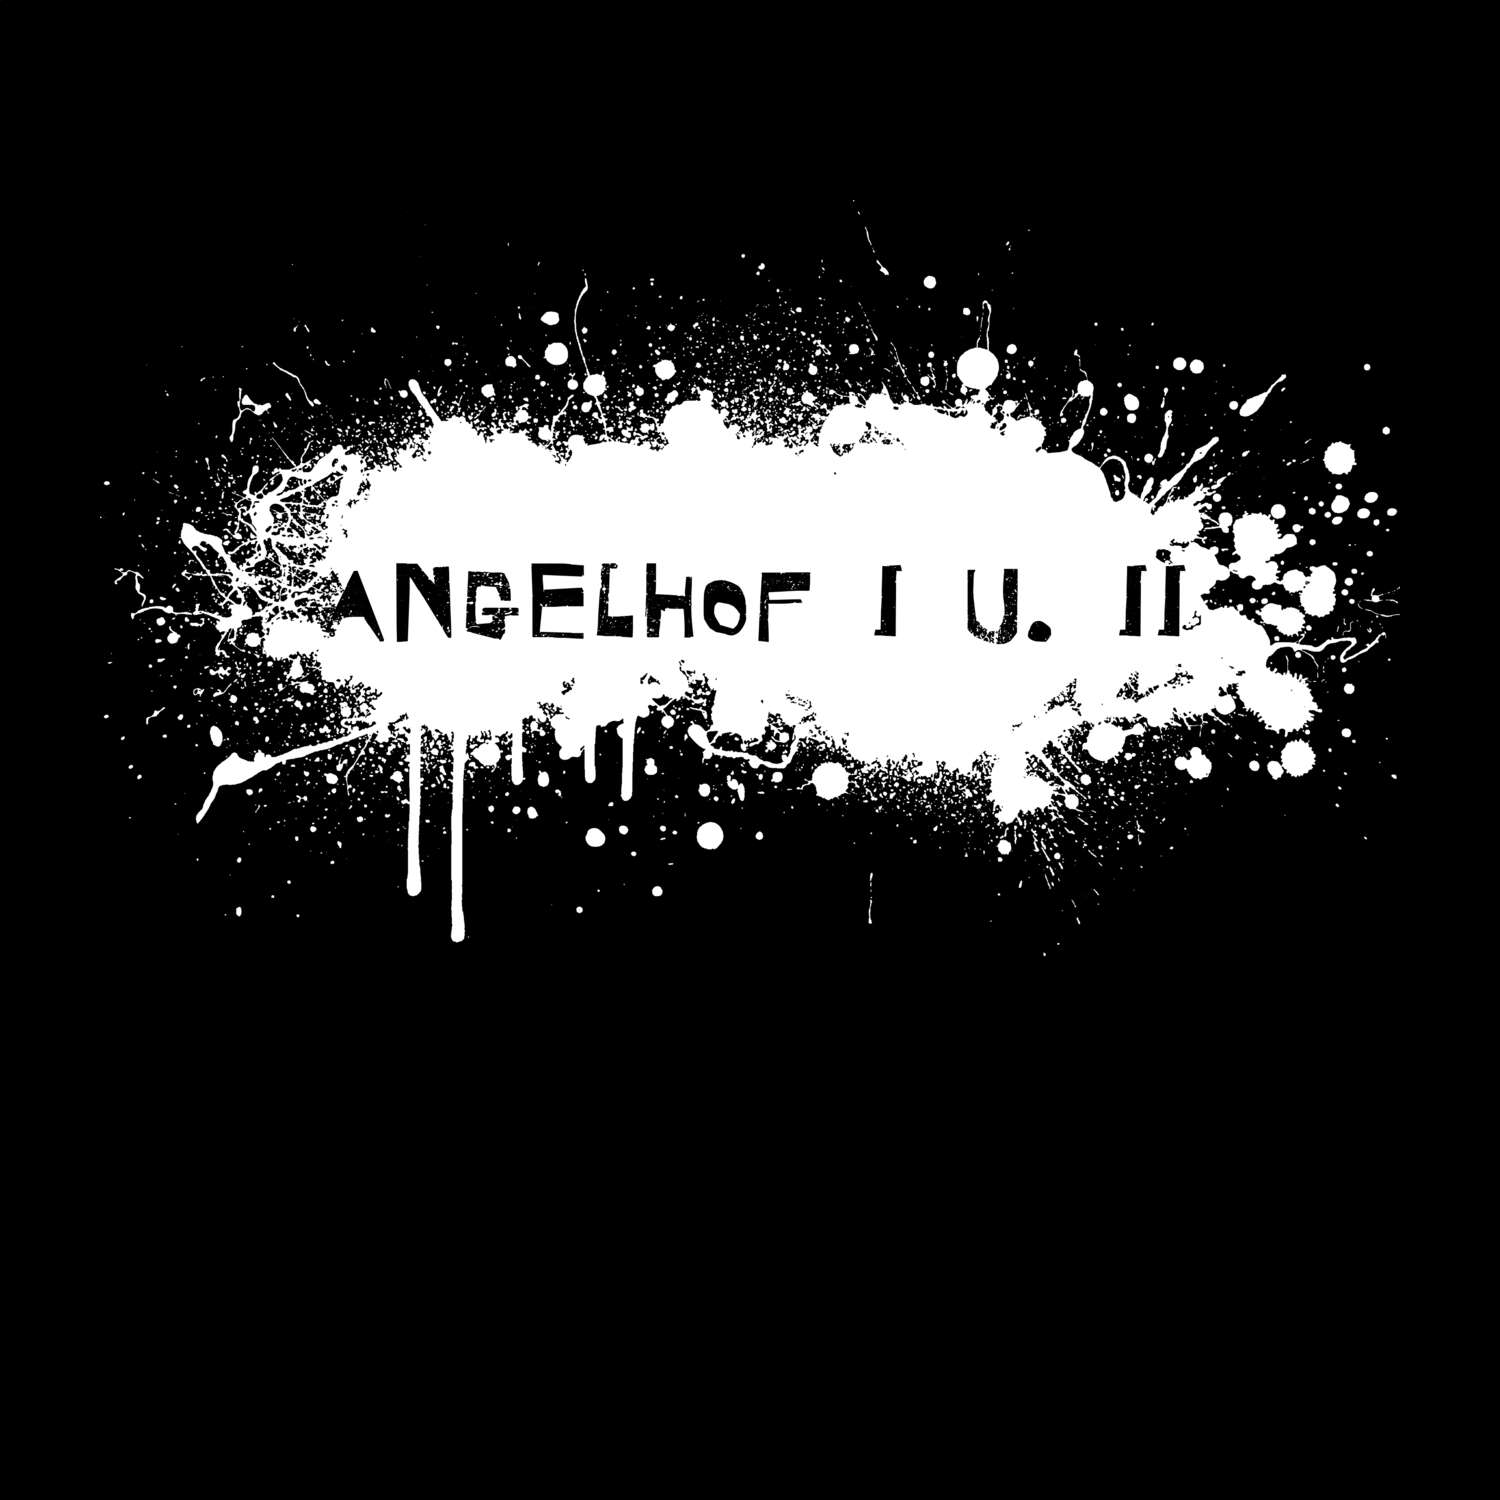 Angelhof I u. II T-Shirt »Paint Splash Punk«